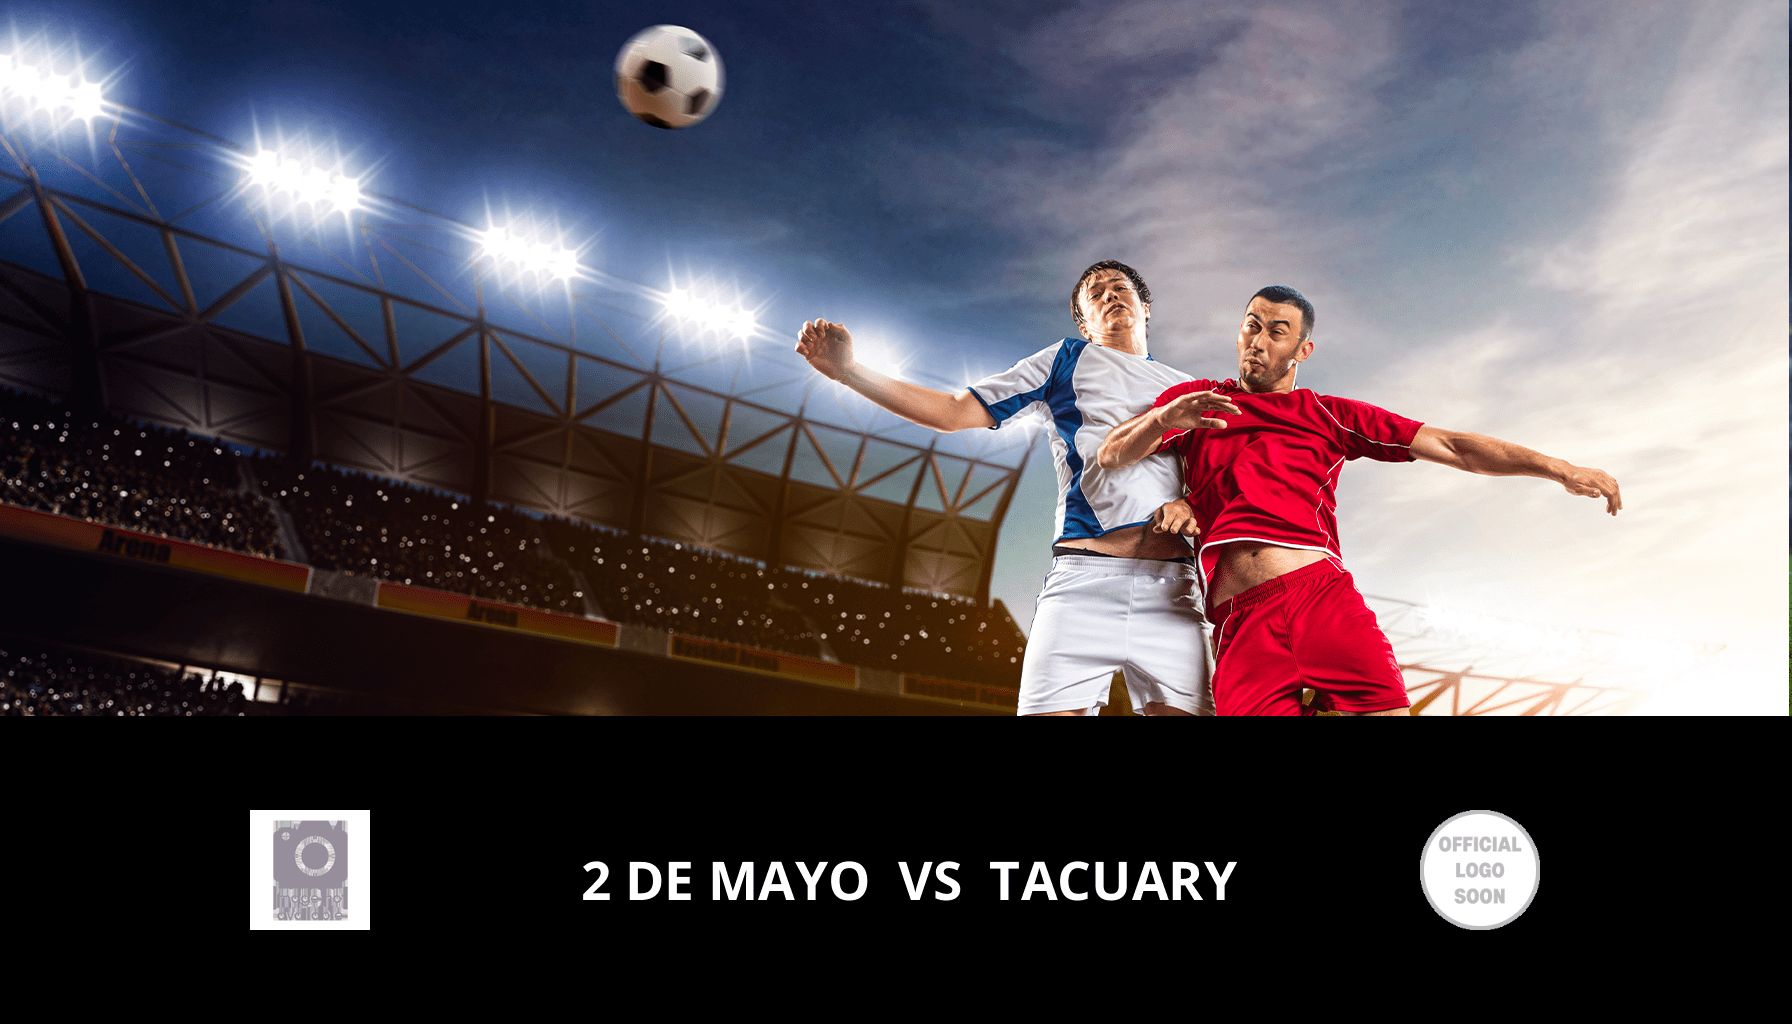 Previsione per 2 de Mayo VS Tacuary il 11/05/2024 Analysis of the match